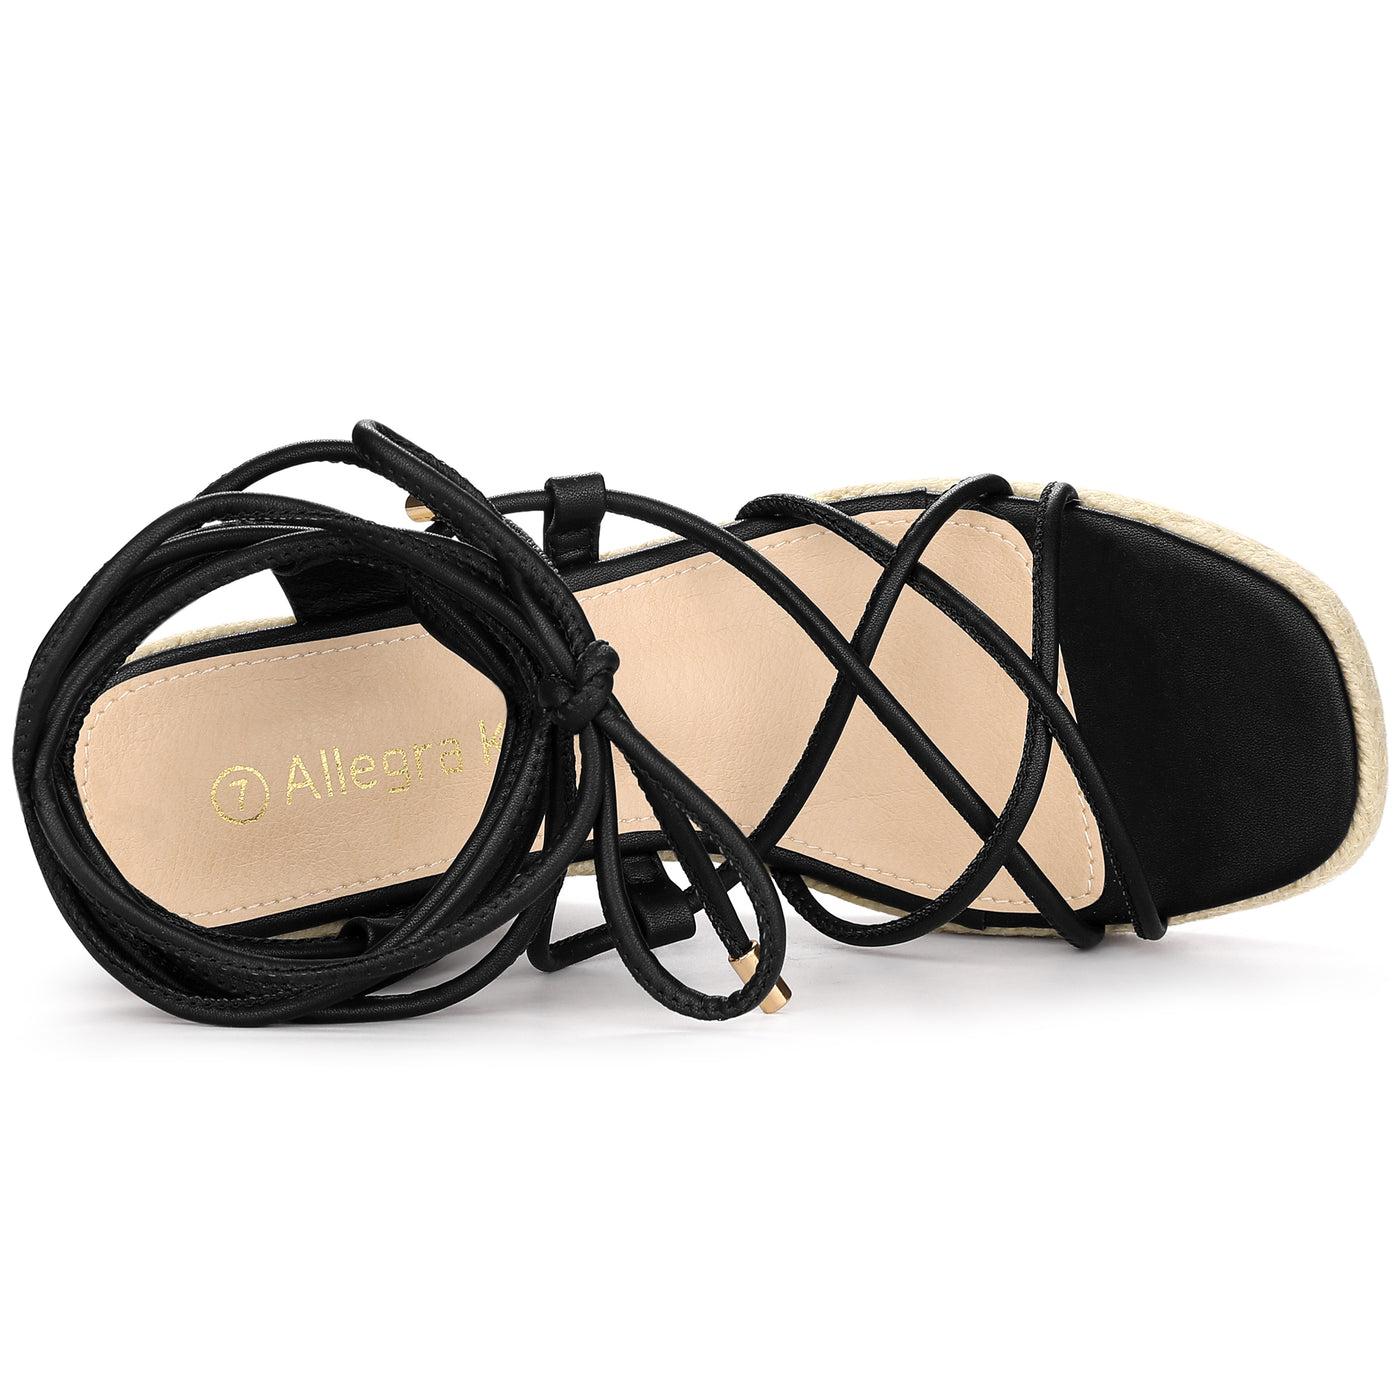 Allegra K Women's Lace Up Platform Square Heel Espadrilles Wedge Sandals